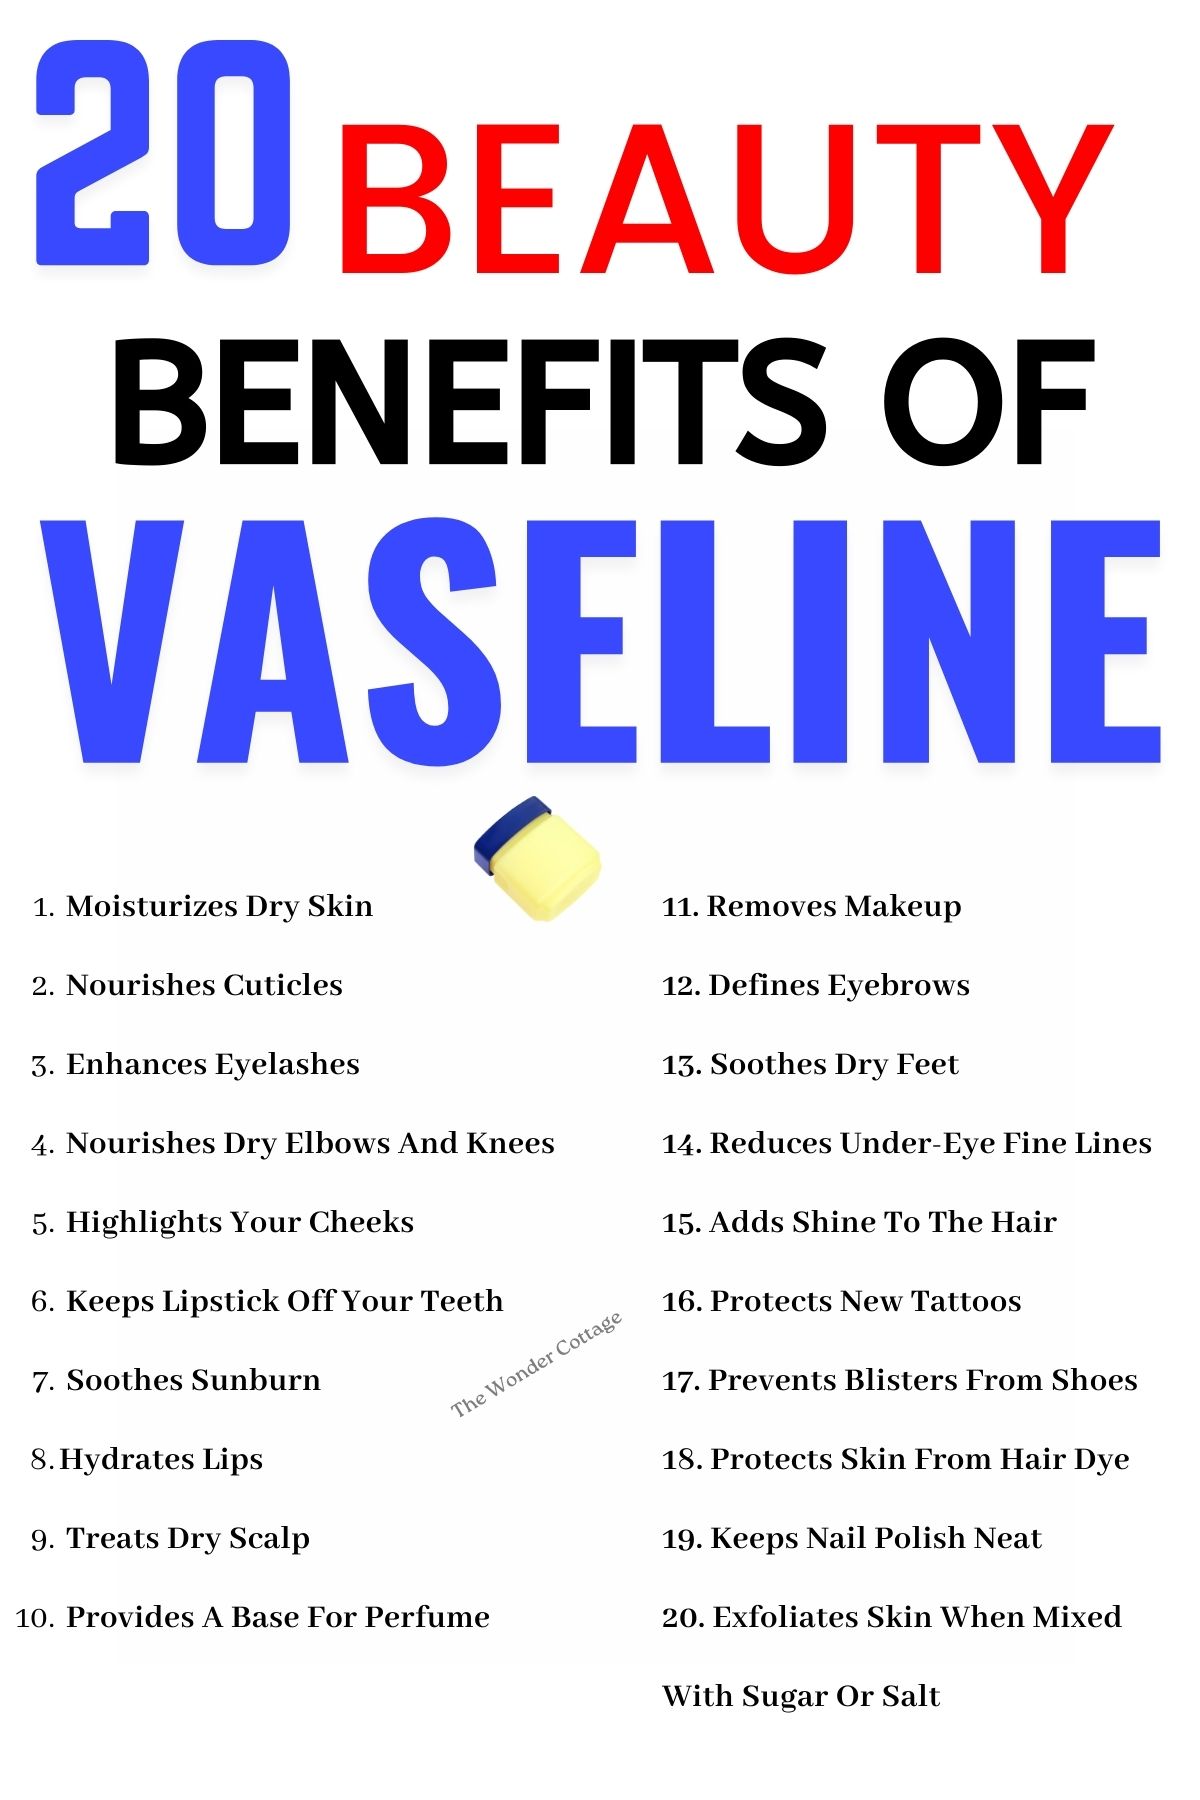 20 Beauty Benefits Of Vaseline